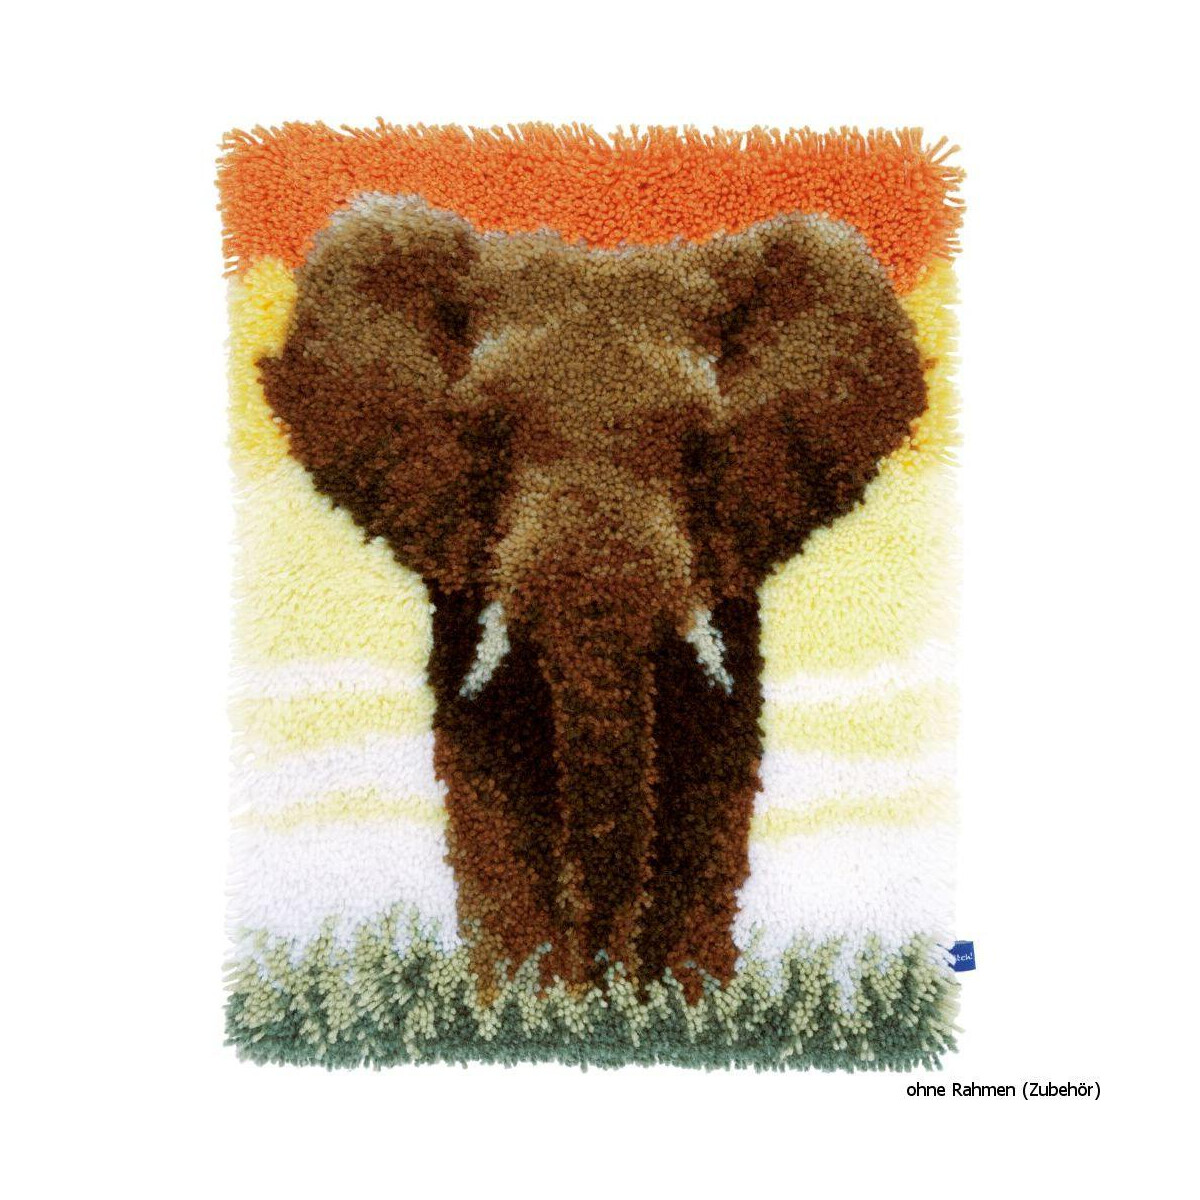 Vervaco Latch hook rug kit Elephant in the savanna II, DIY